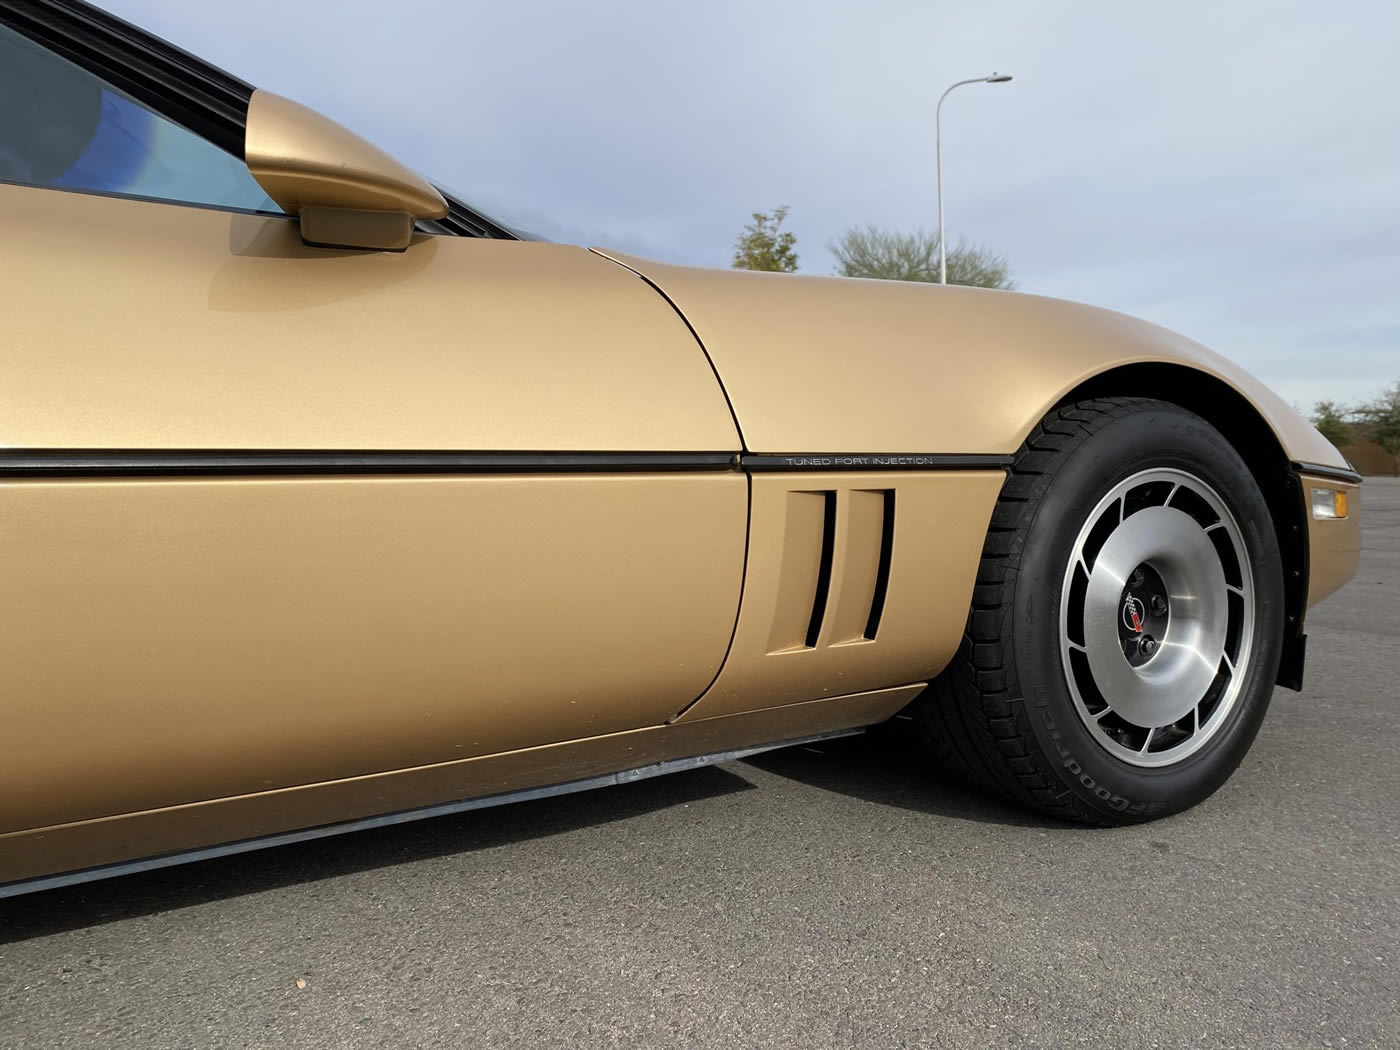 1985 Corvette in Gold Metallic